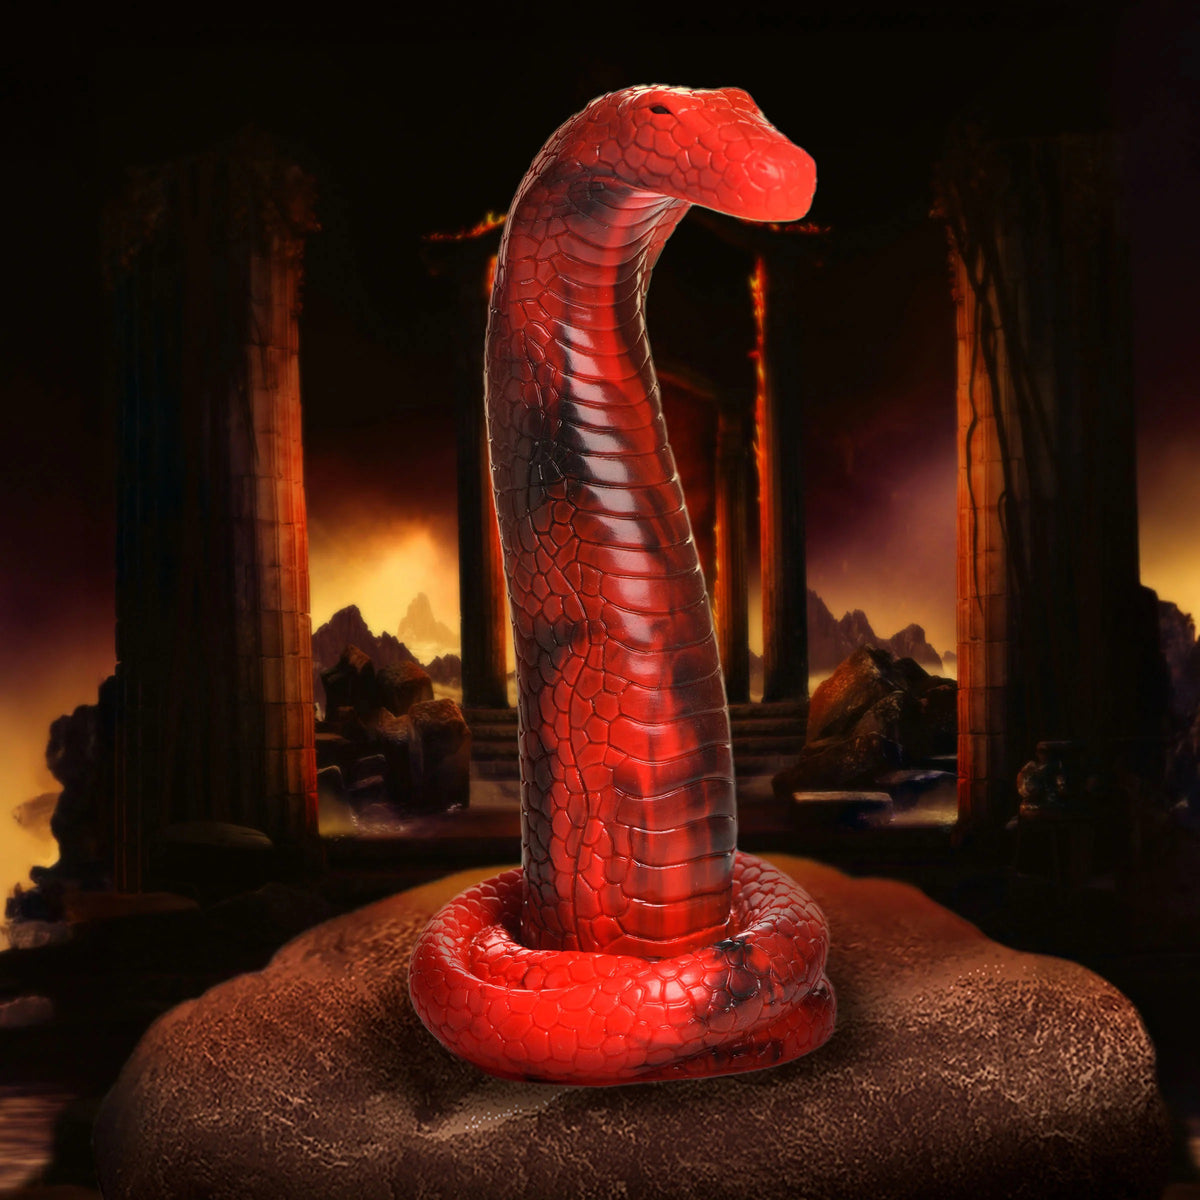 King Cobra Consolador de Silicona King Cobra - Rojo